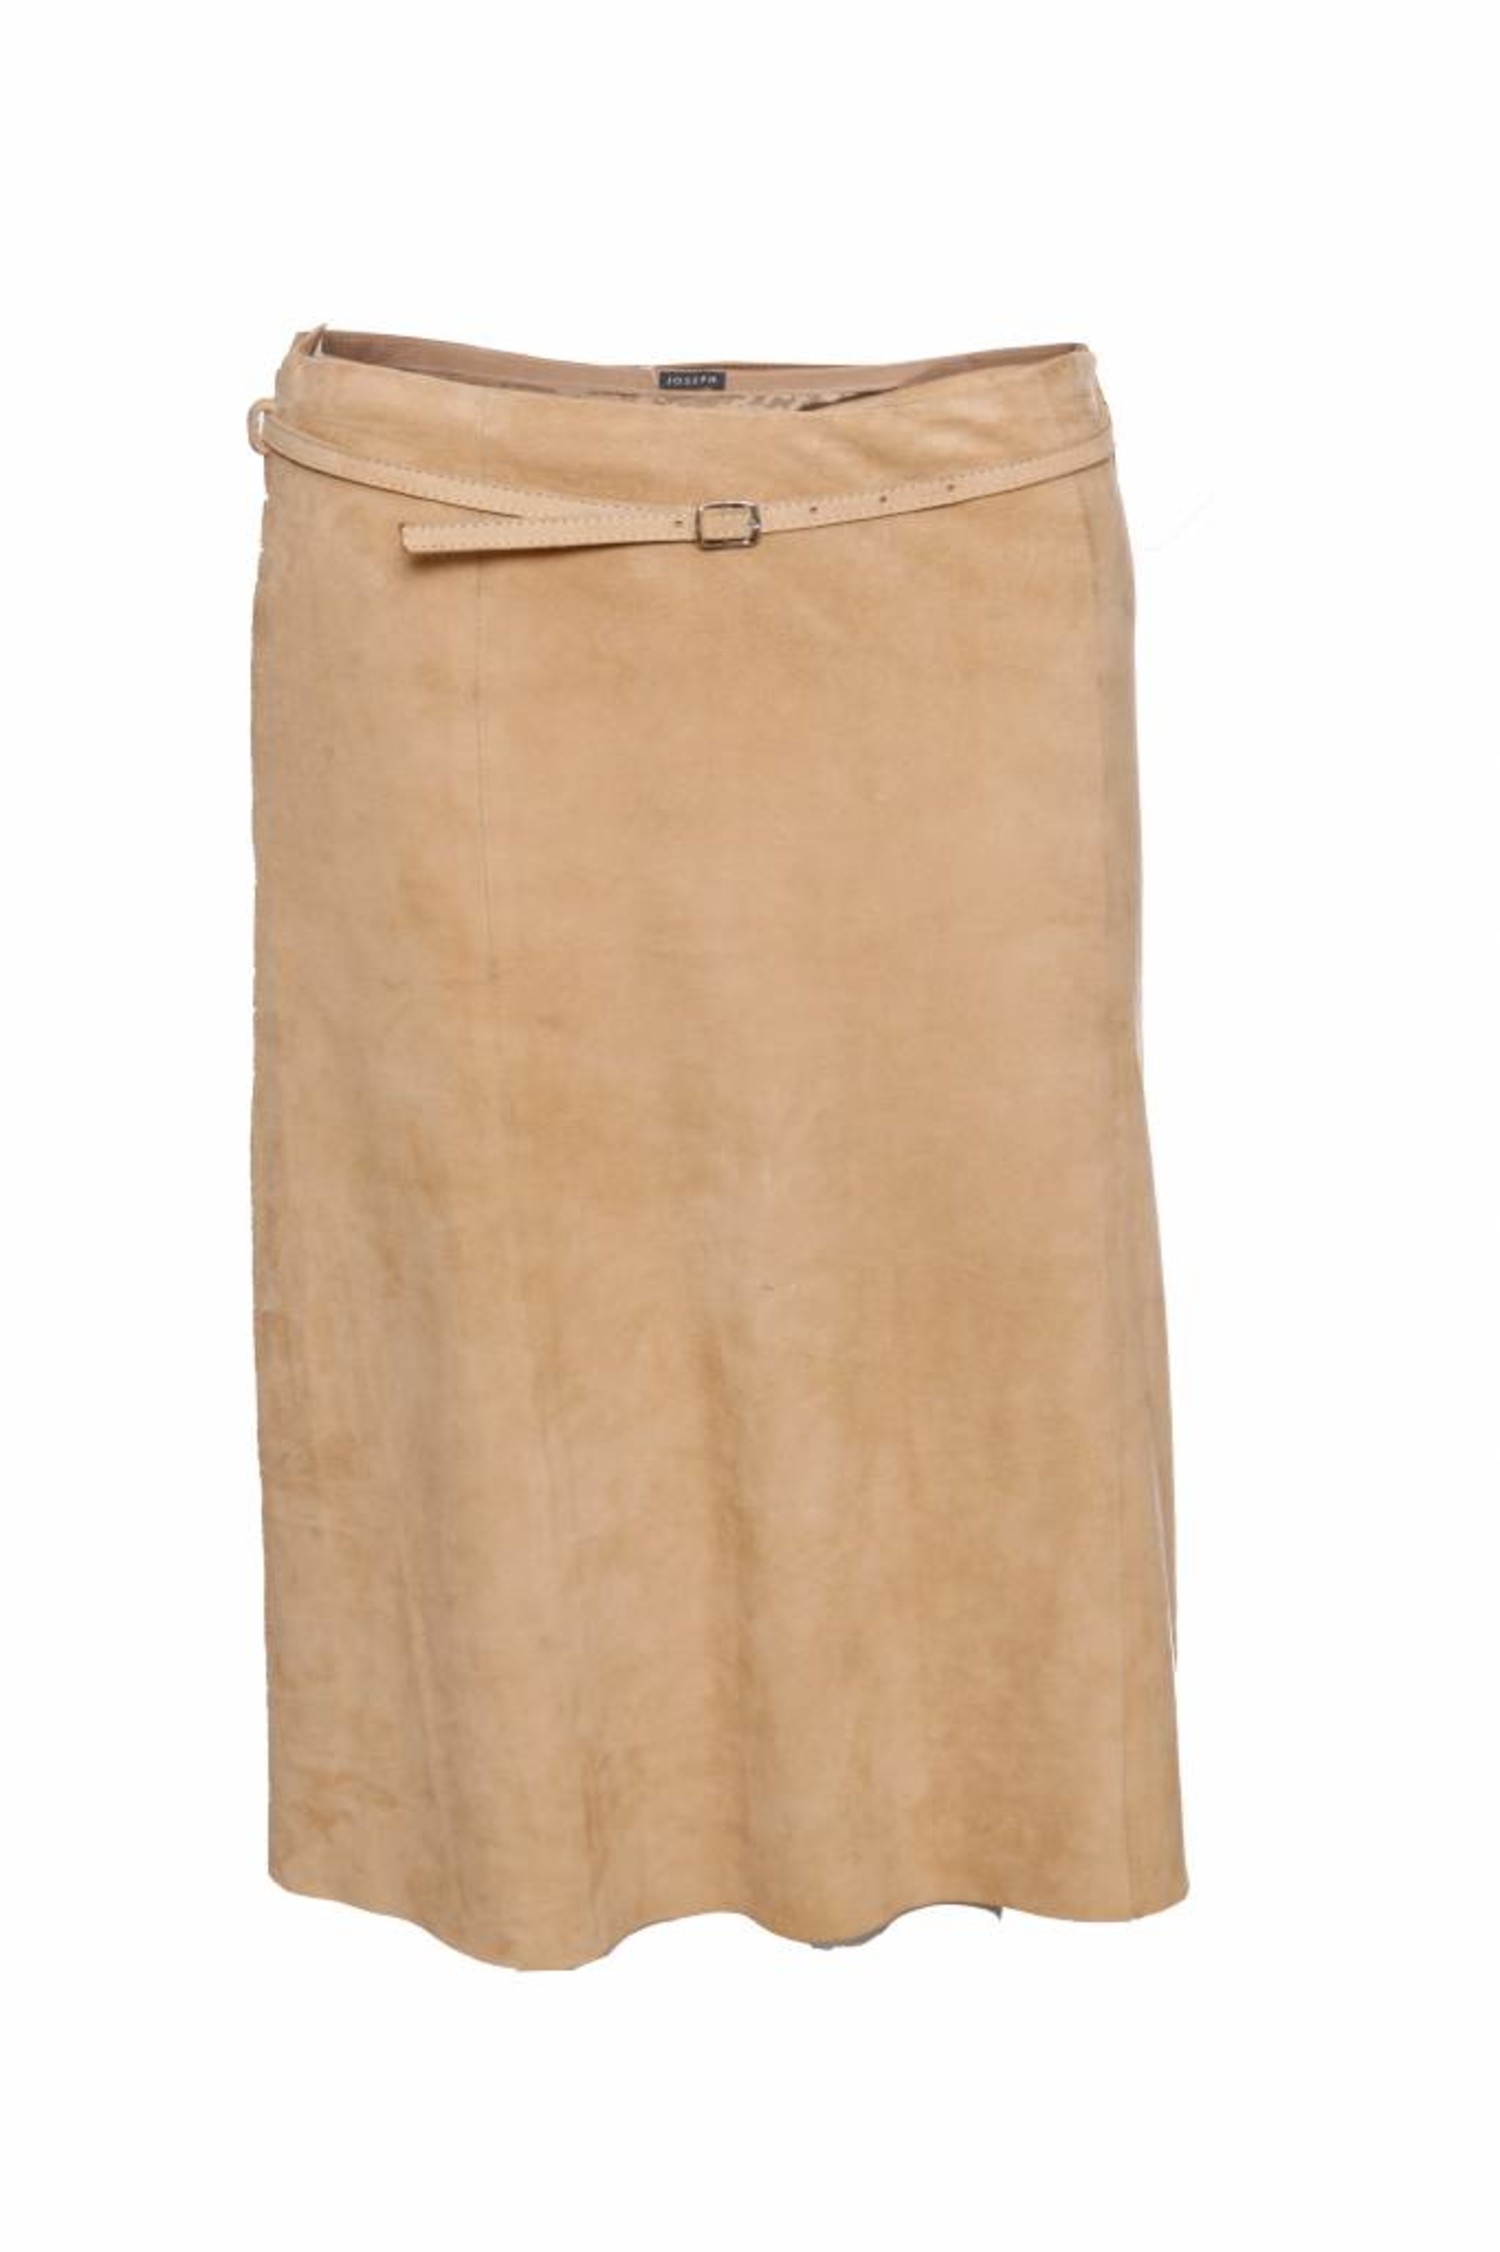 Joseph, camel colored suede skirt - Unique Designer Pieces